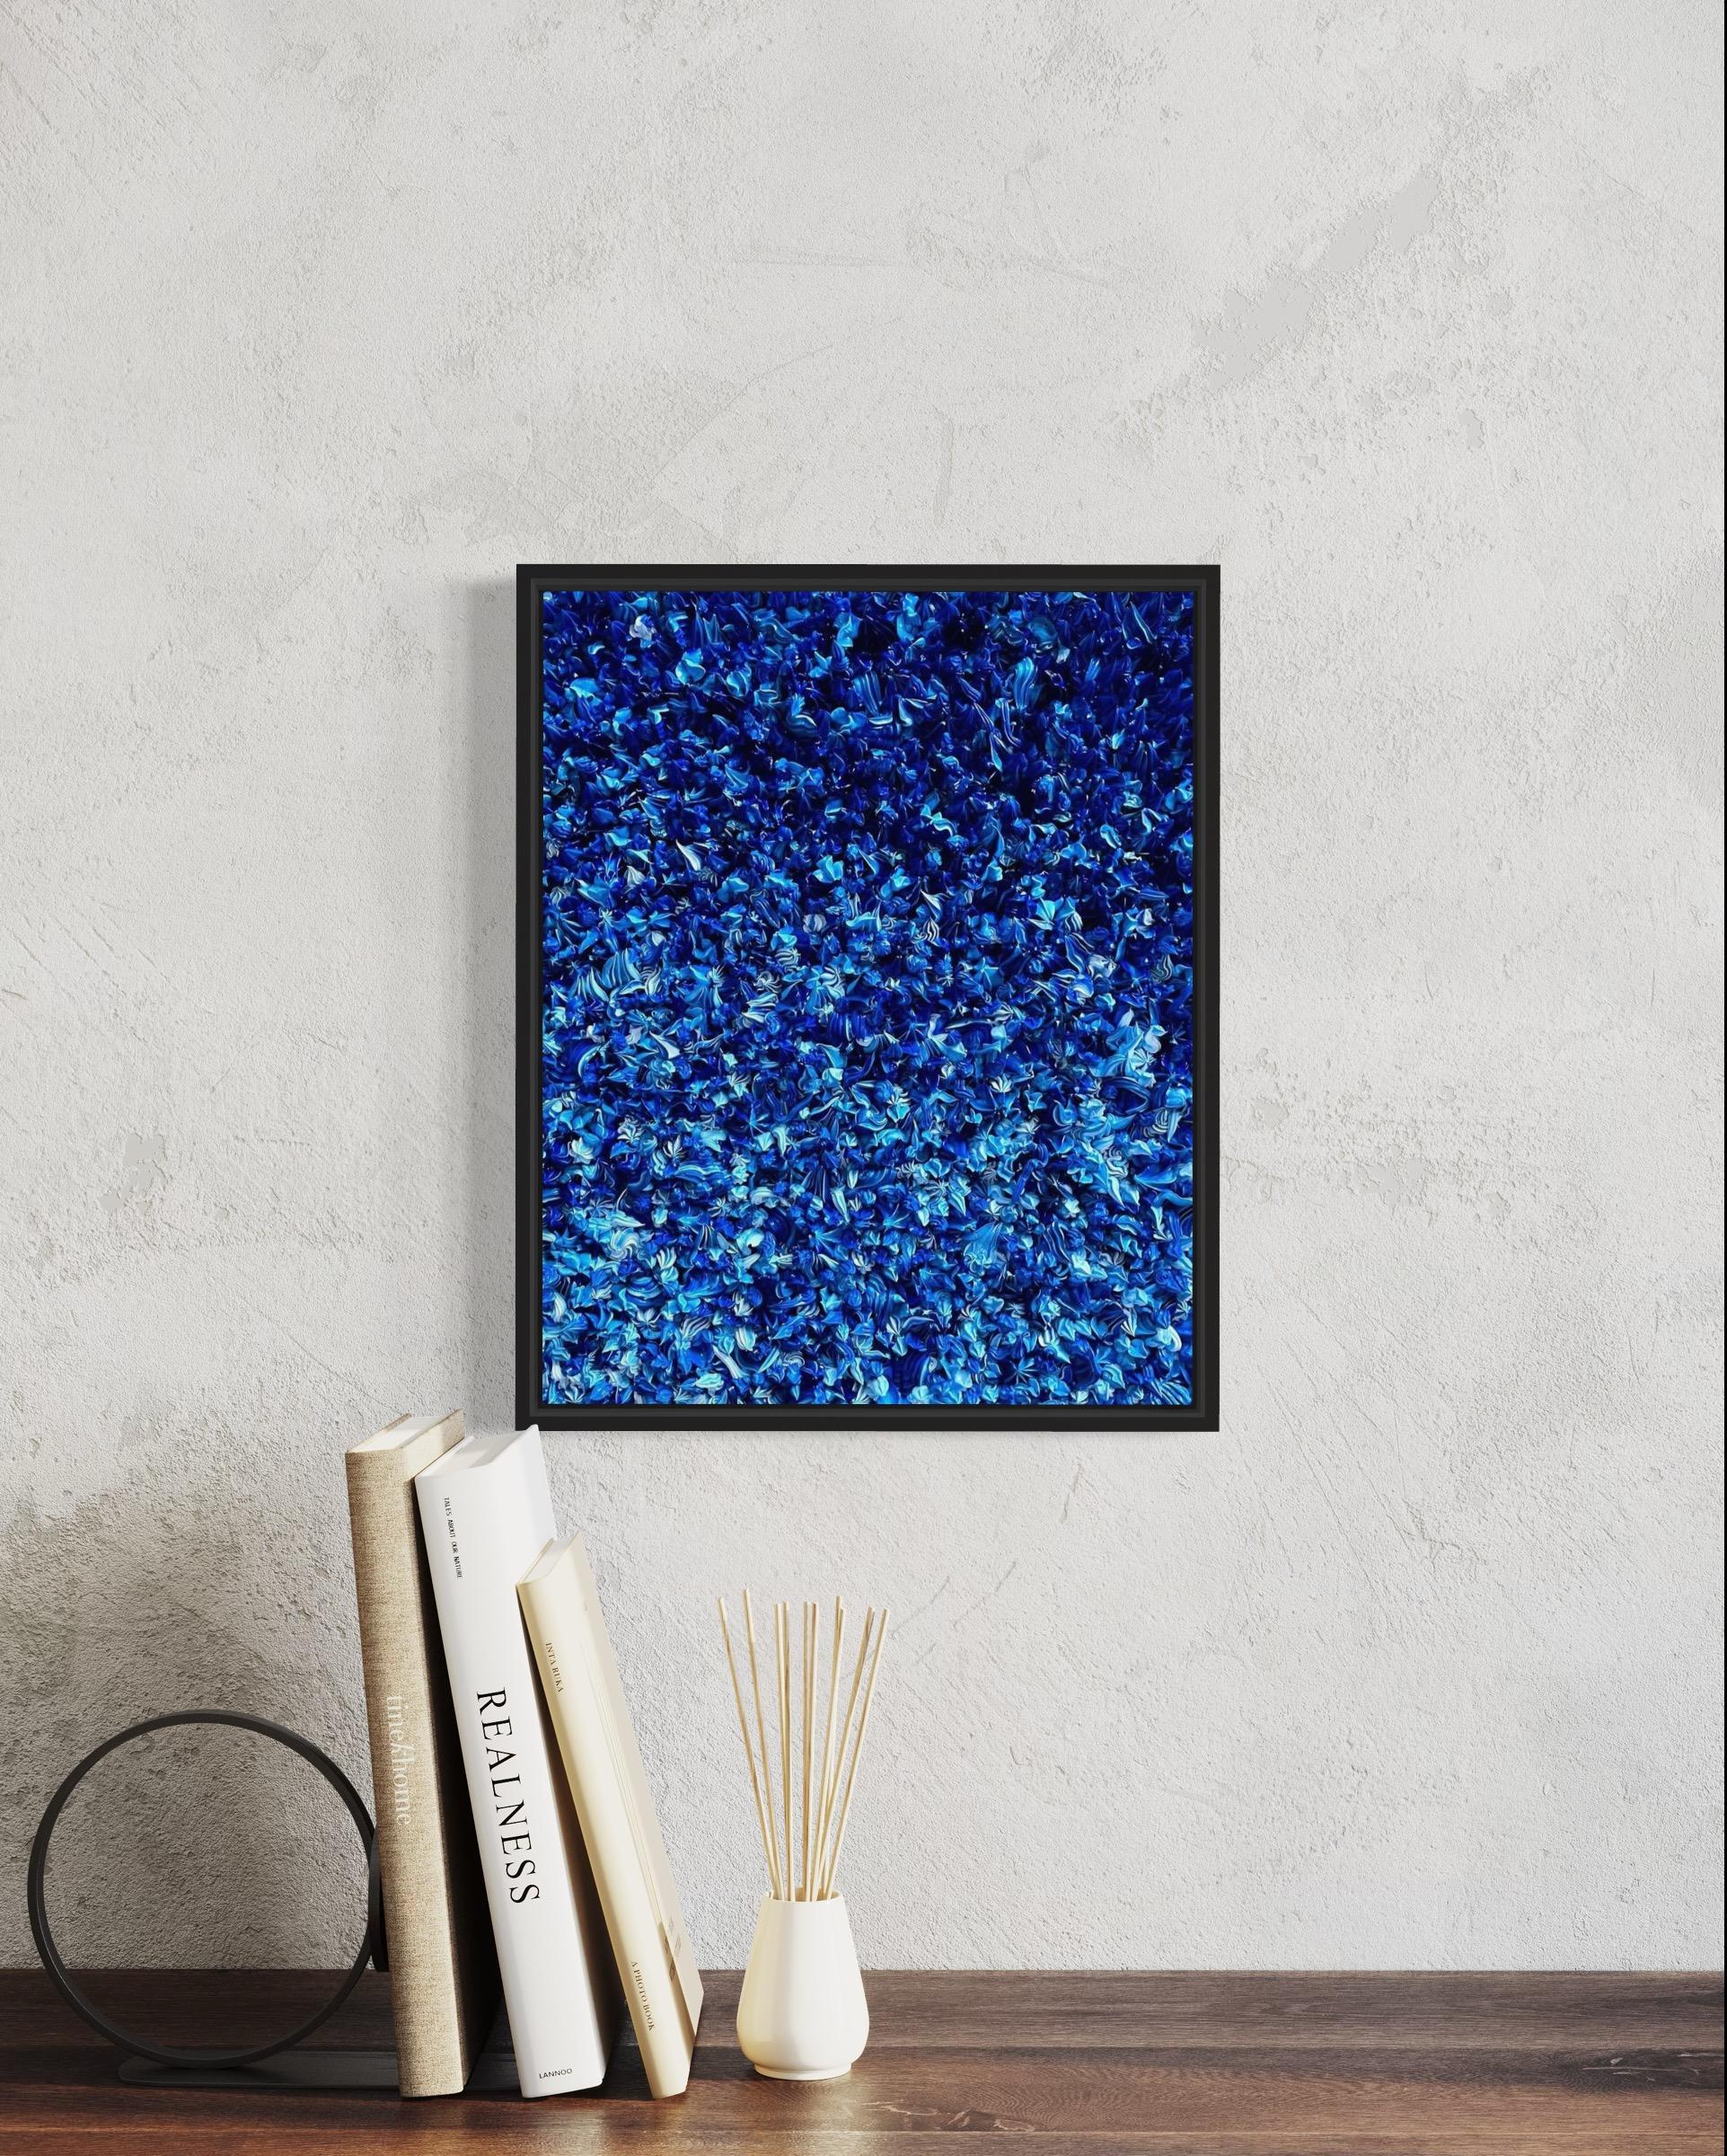 50 Shades of Blue - Pop Art Mixed Media Art by christophe sola